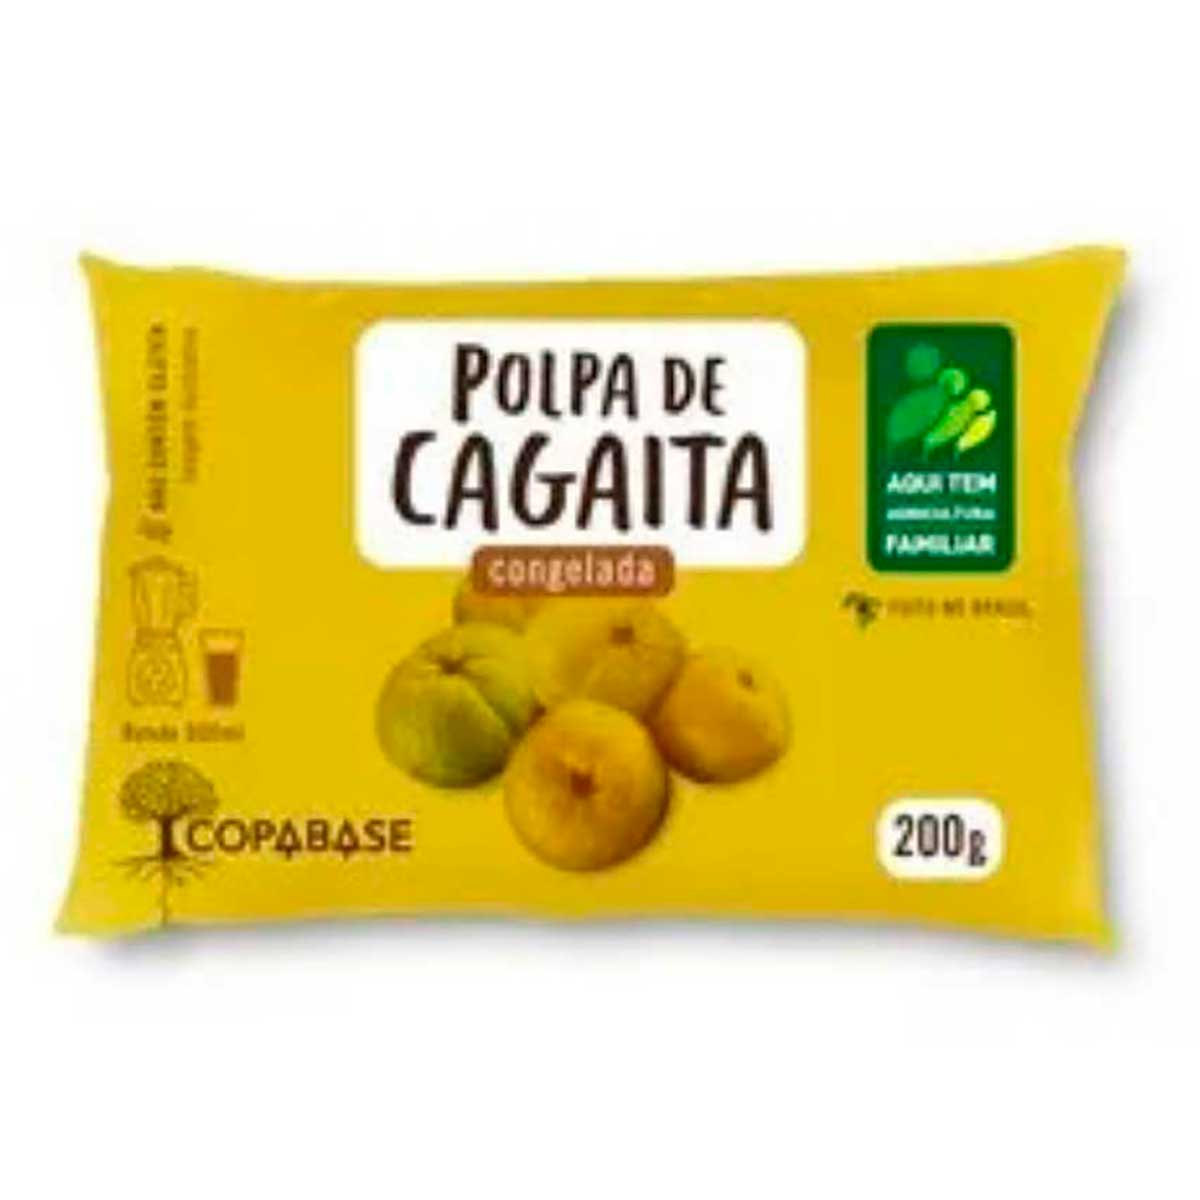 polpa-congelada-cobase-cagaita-200-g-1.jpg